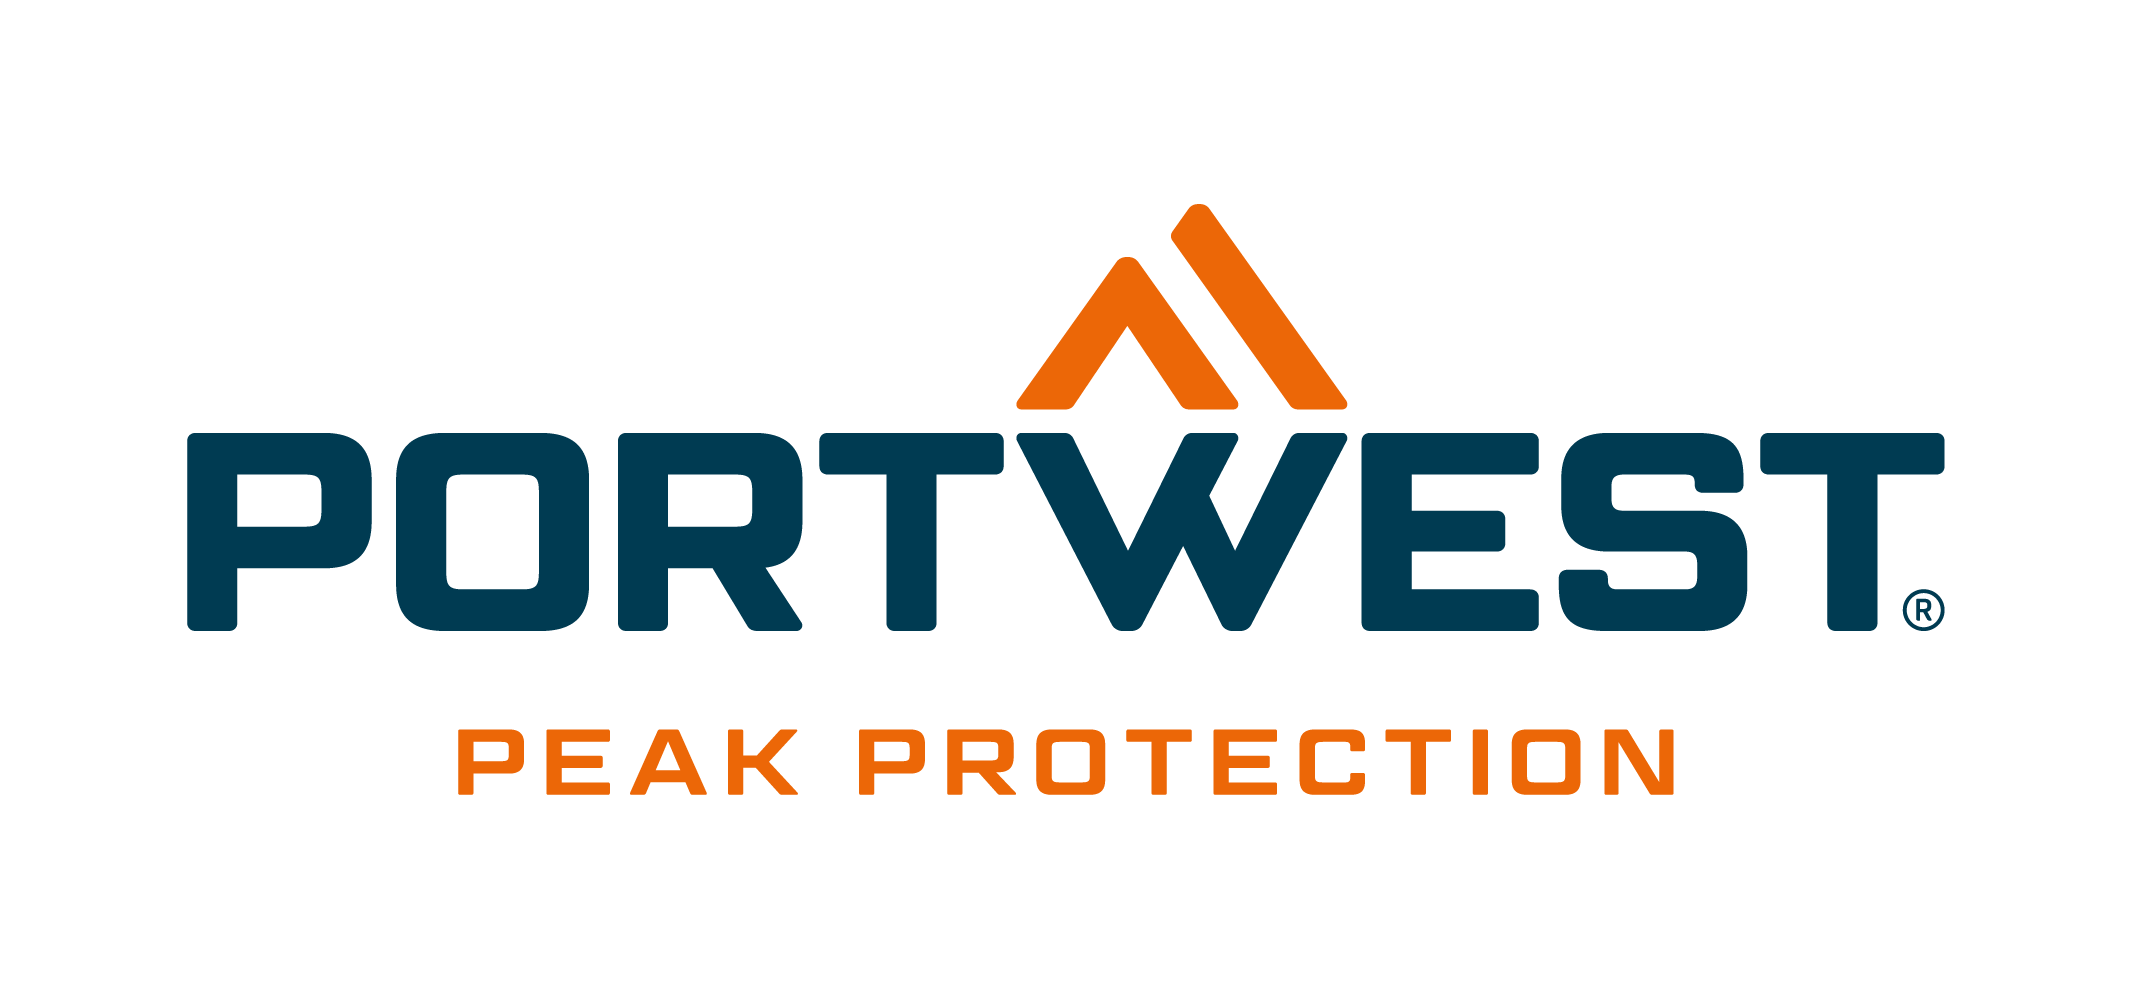 https://cottonmadeinafrica.org/wp-content/uploads/Portwest-Logo.png